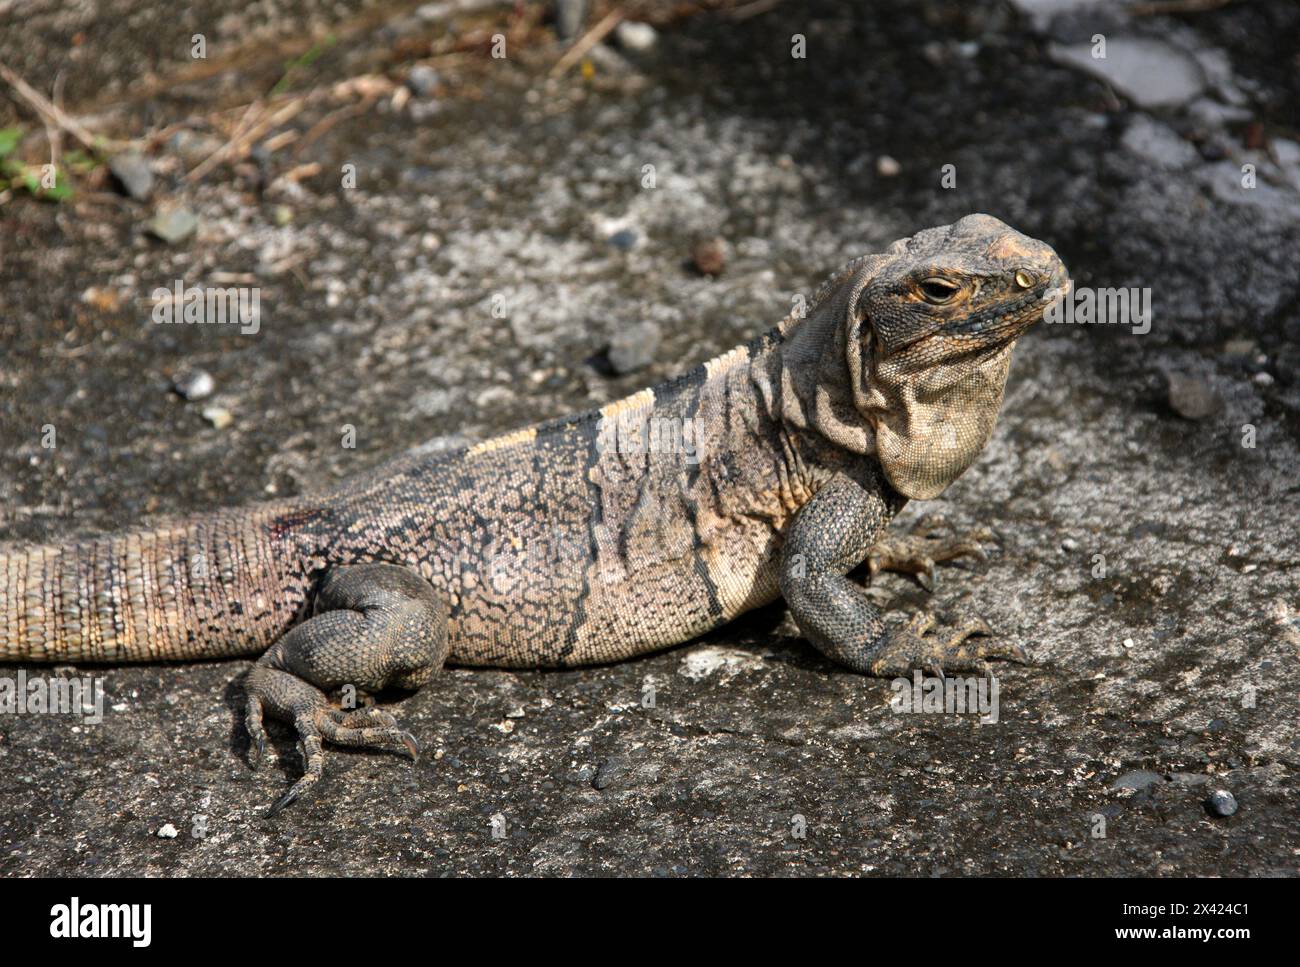 Iguana nera dalla coda Spiny o iguana nera, Ctenosaura similis, Iguanidae. Manuel Antonio, Costa Rica, America centrale. Foto Stock